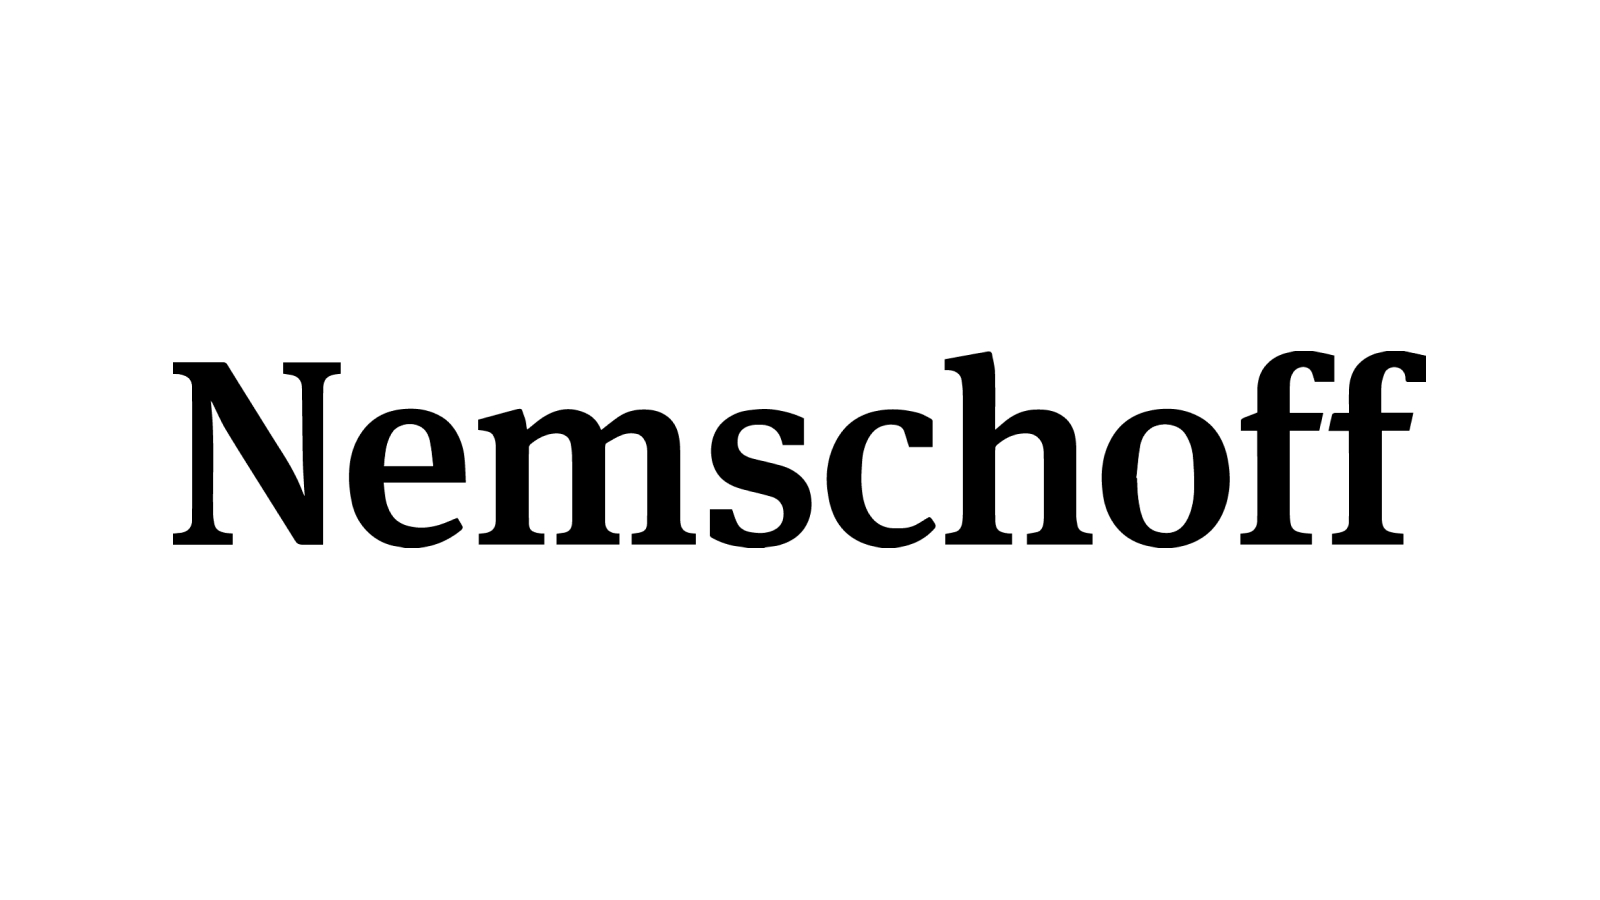 Nemschoff